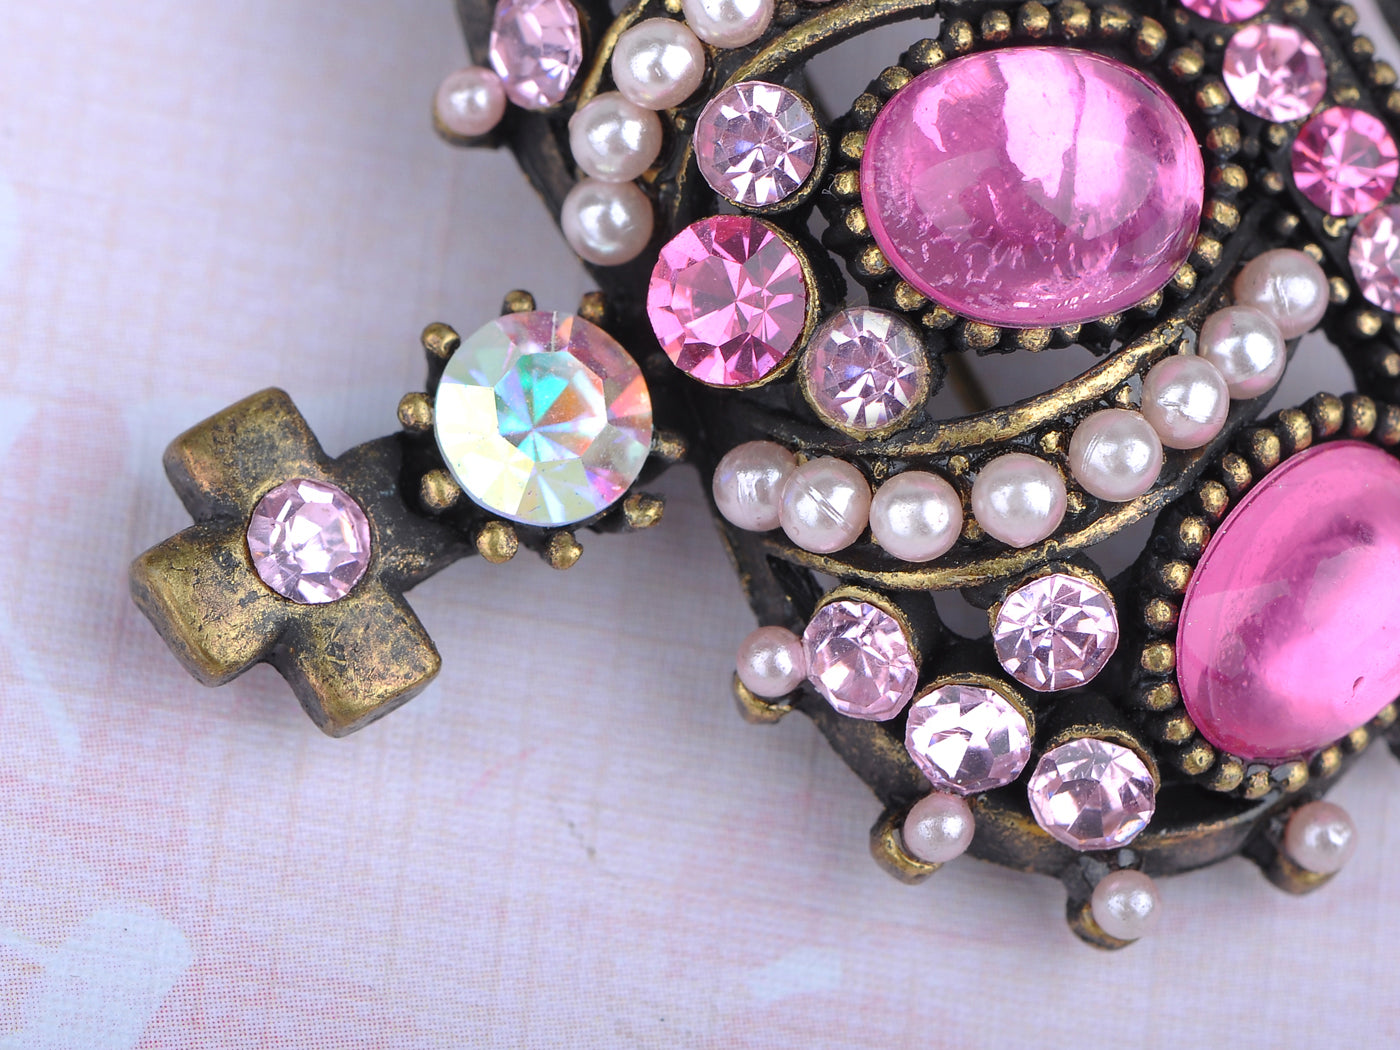 Pink Gem Royal King Crown Jewelry Pin Brooch